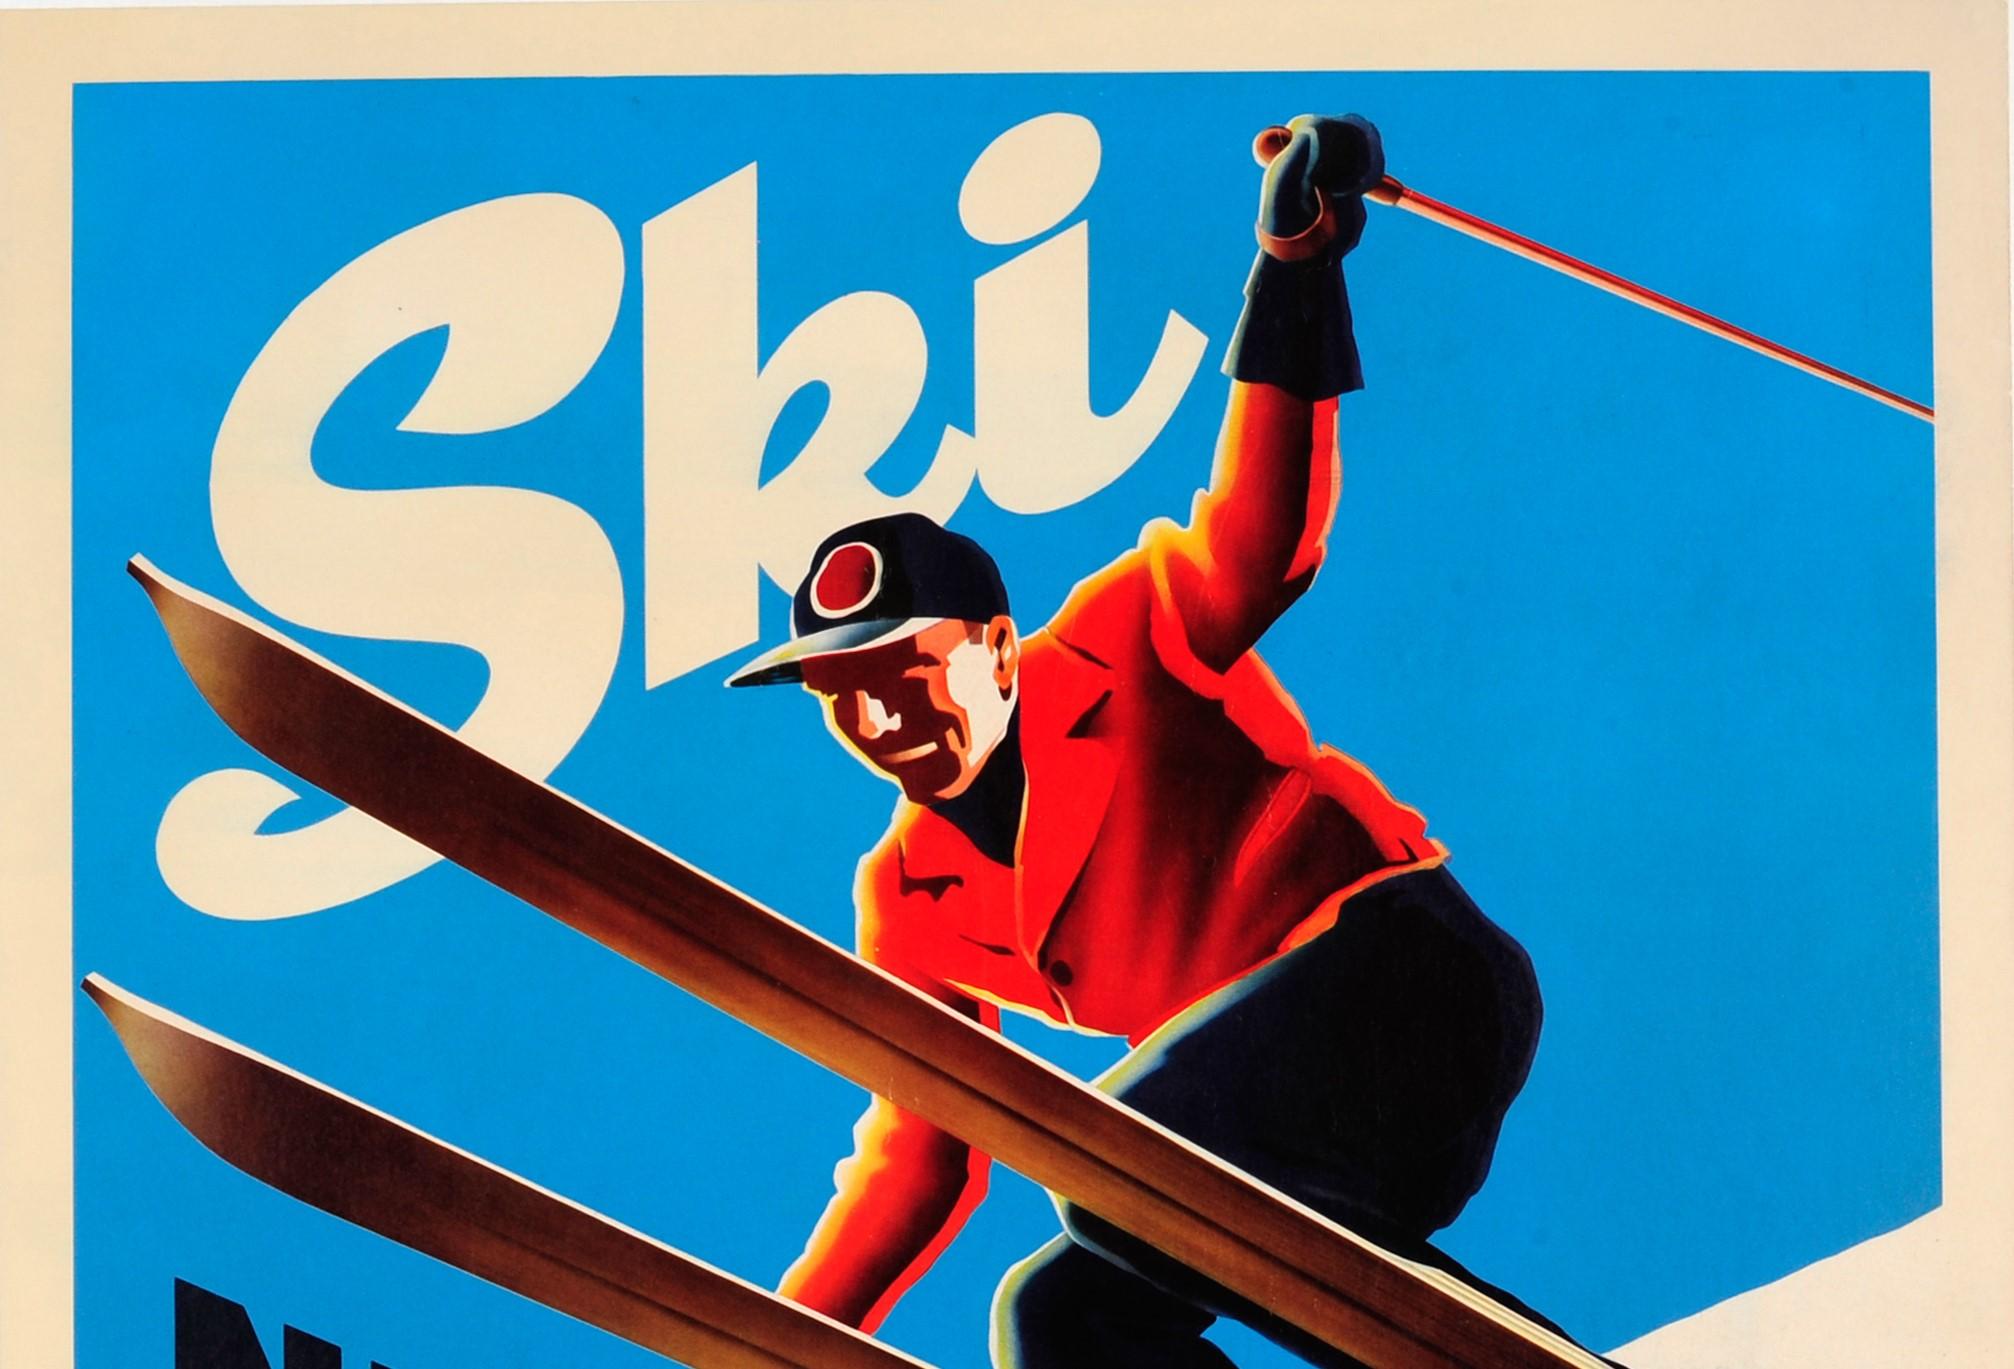 Original Vintage Skiing Poster Ski New York Ft. Skier Courtesy NY State Governor - Print by H.W.